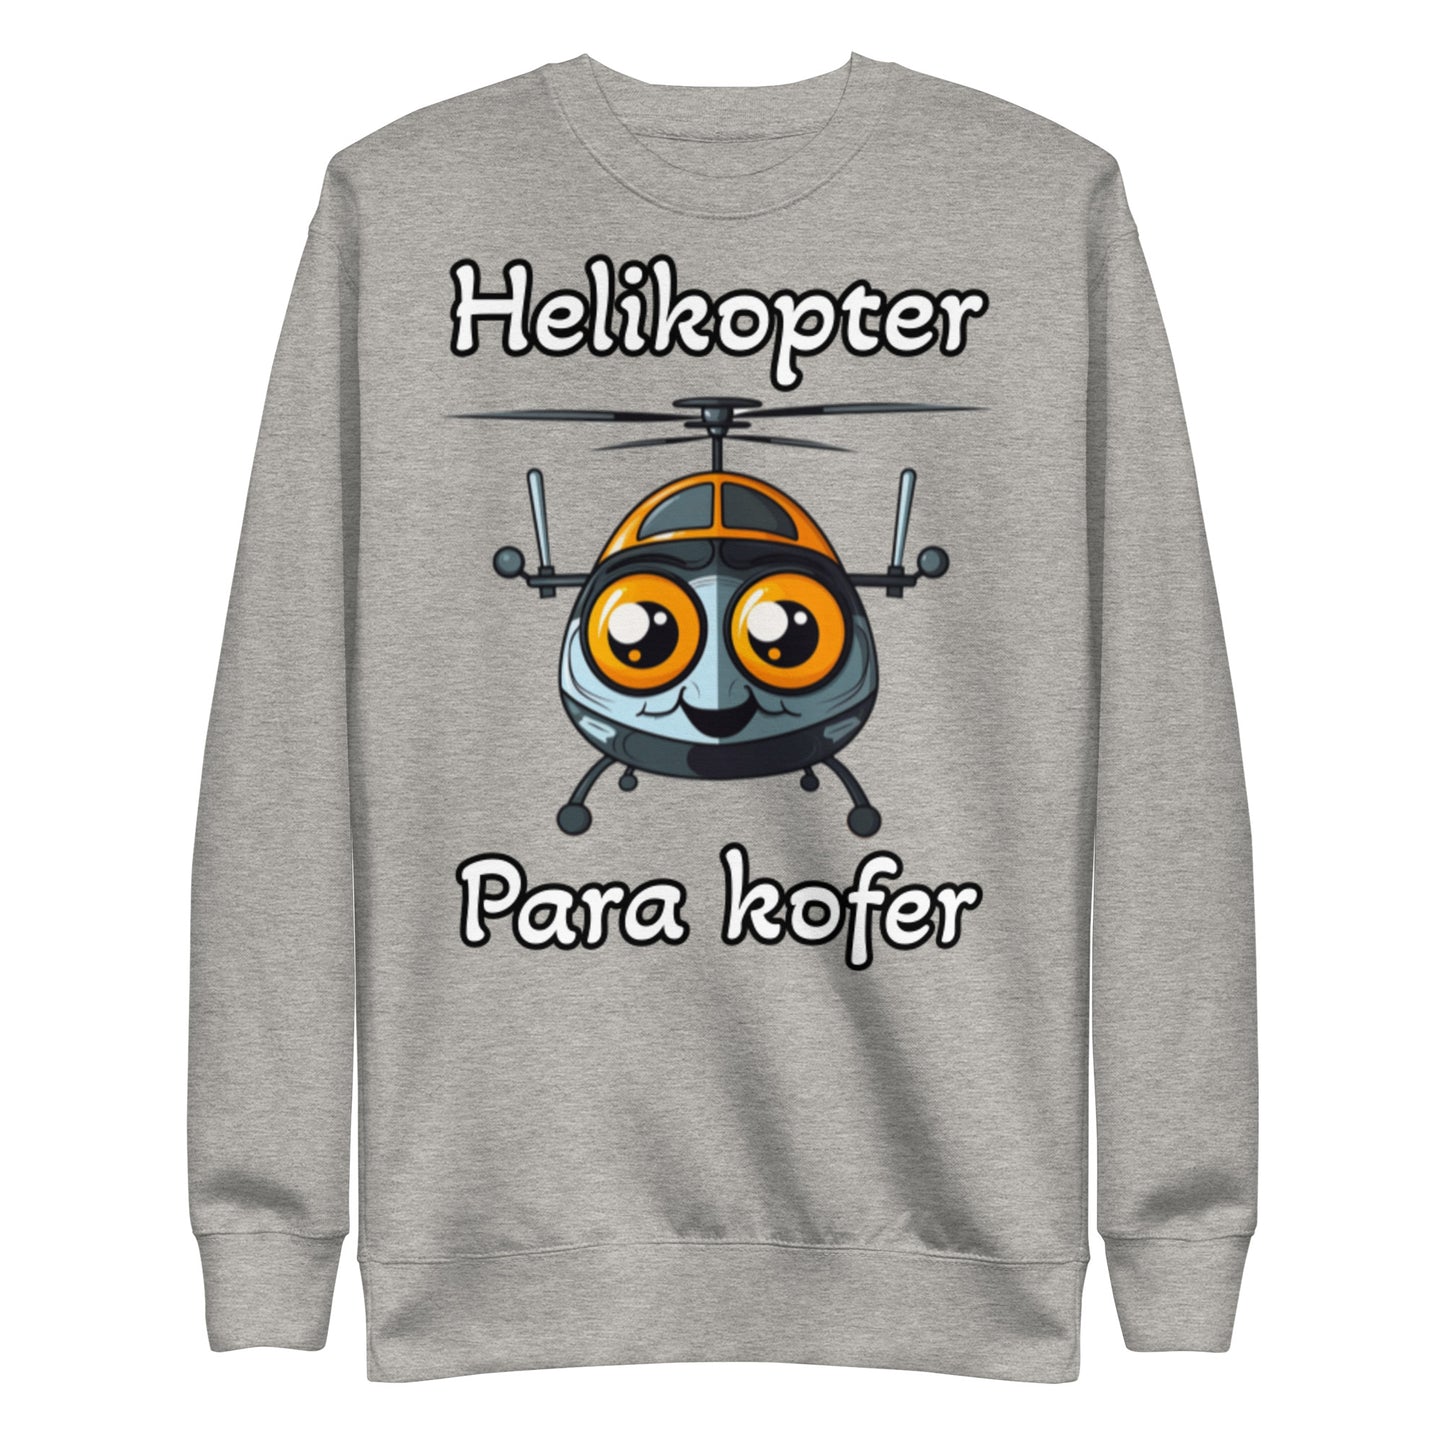 Helikopter Para kofer Sweatshirt